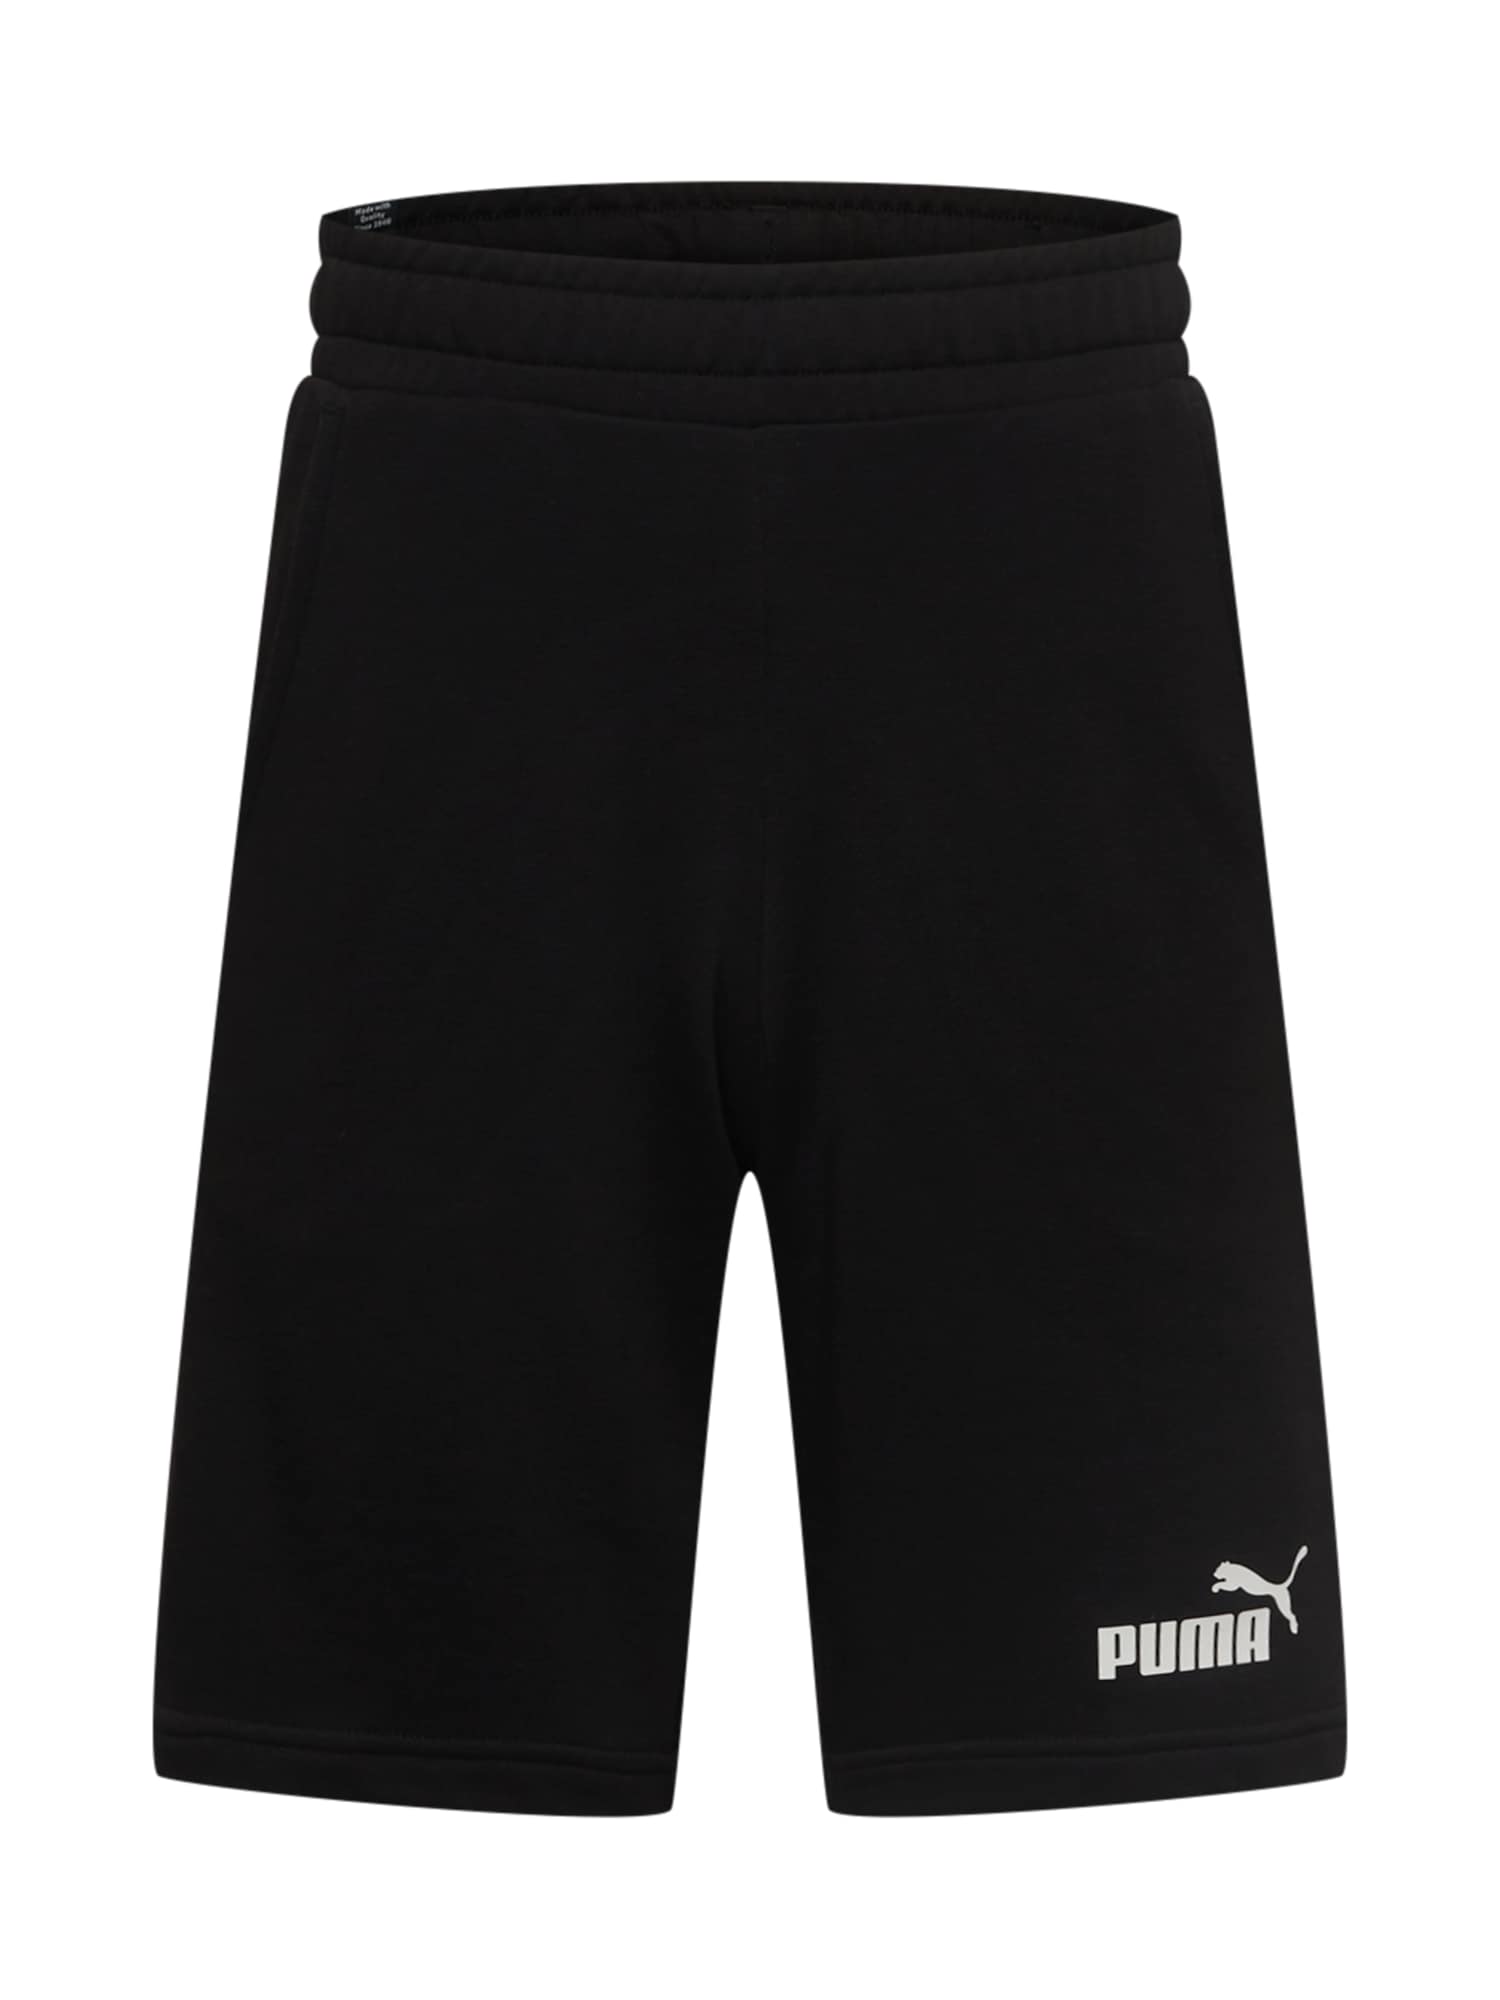 PUMA Sportinės kelnės 'Essentials' juoda / balta